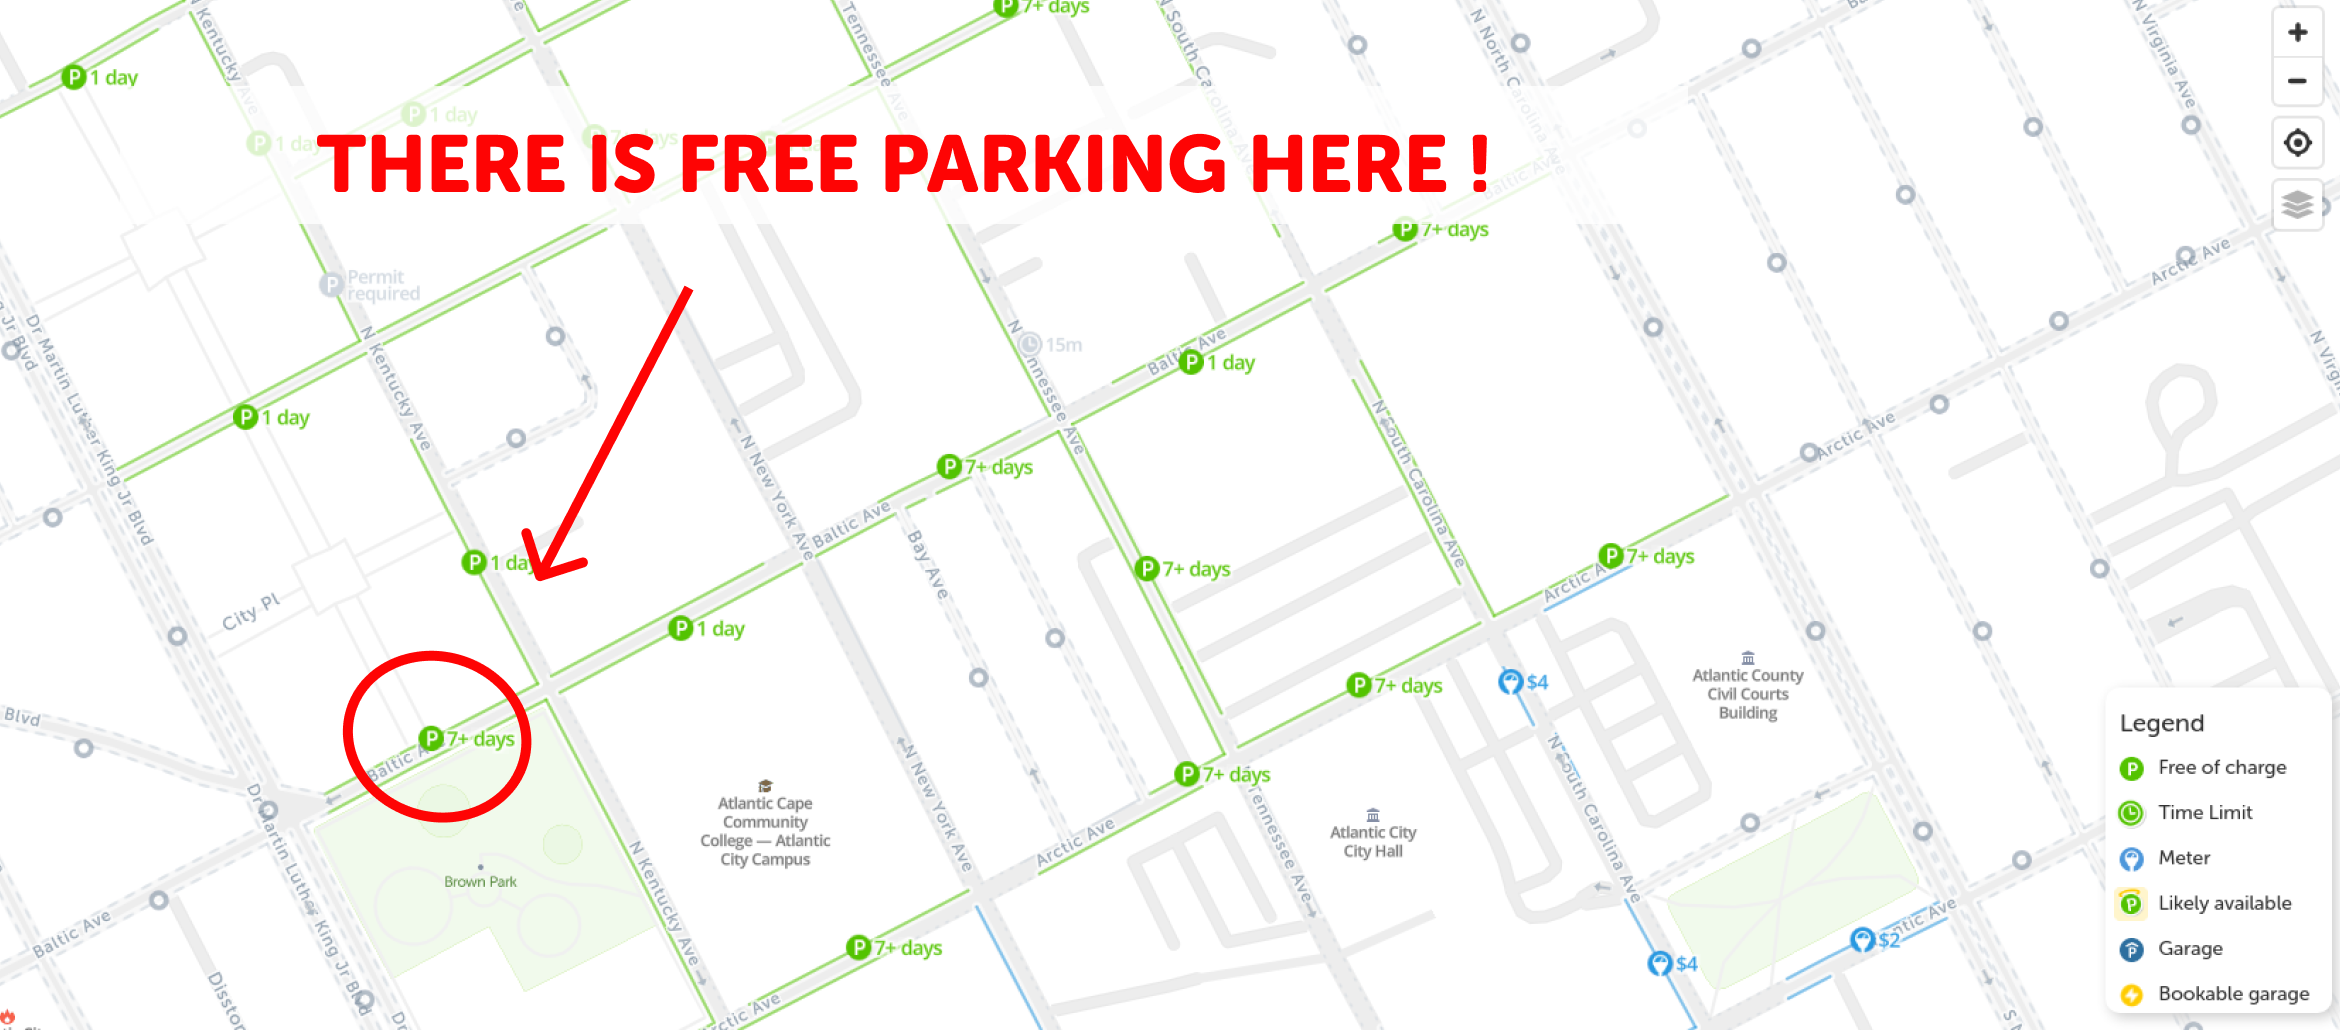 map of free parking in Atlantic City - SpotAngels